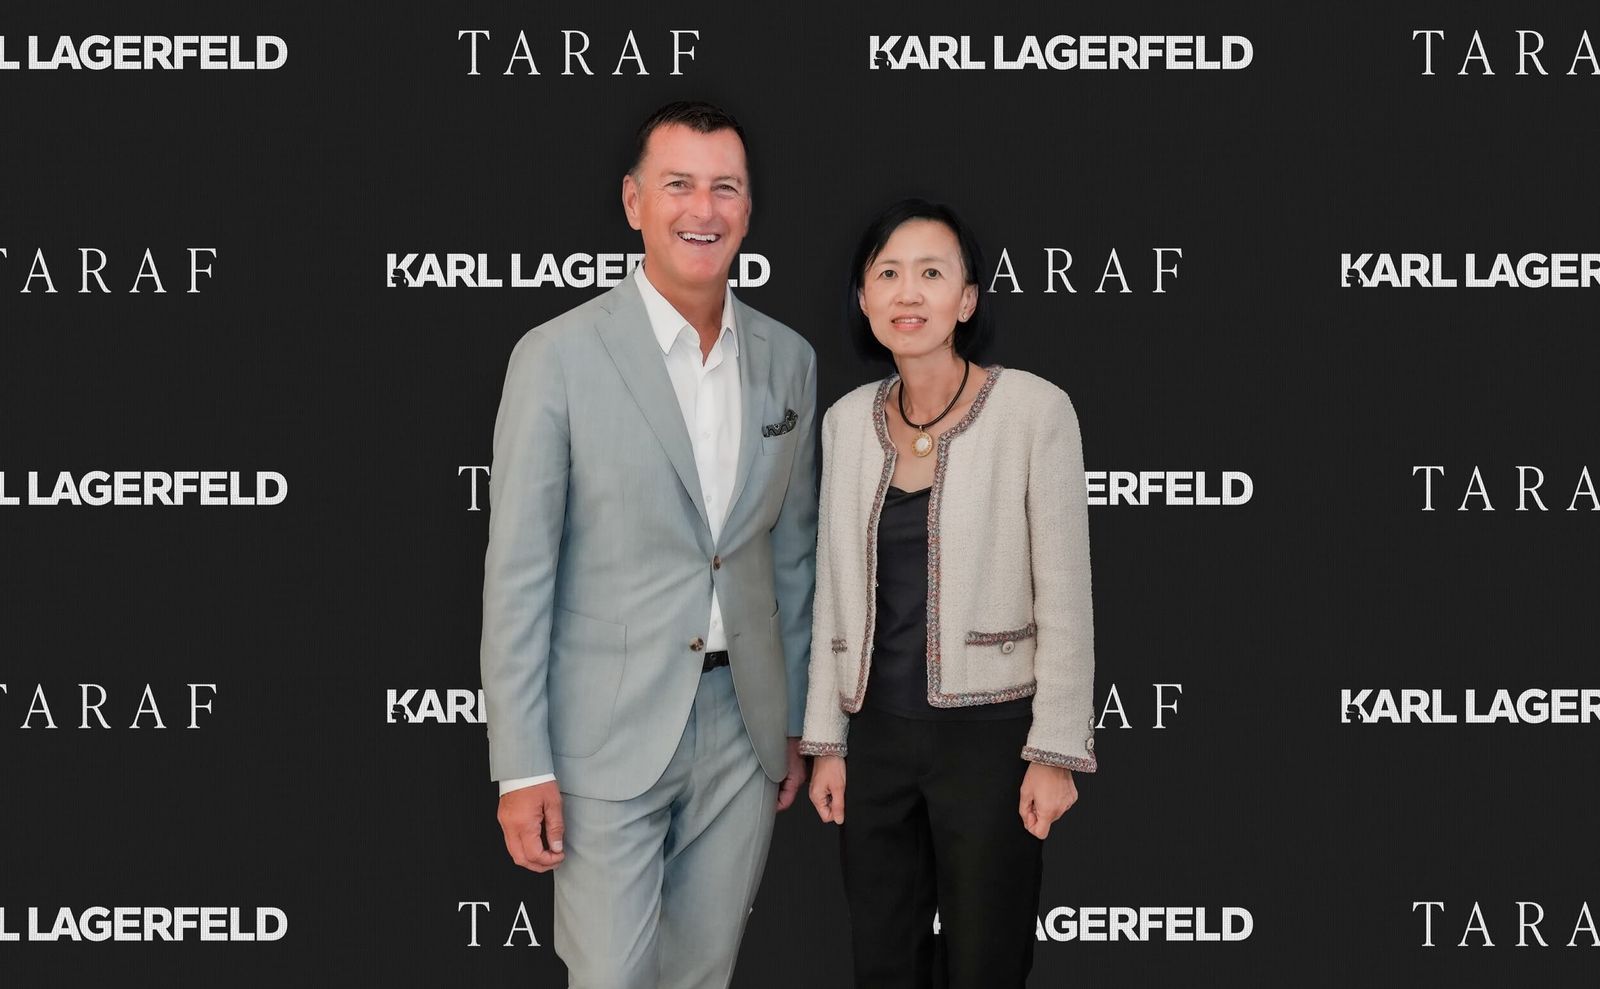 International Fashion House KARL LAGERFELD & UAE’s Taraf Announce Luxury Property Partnership in Dubai